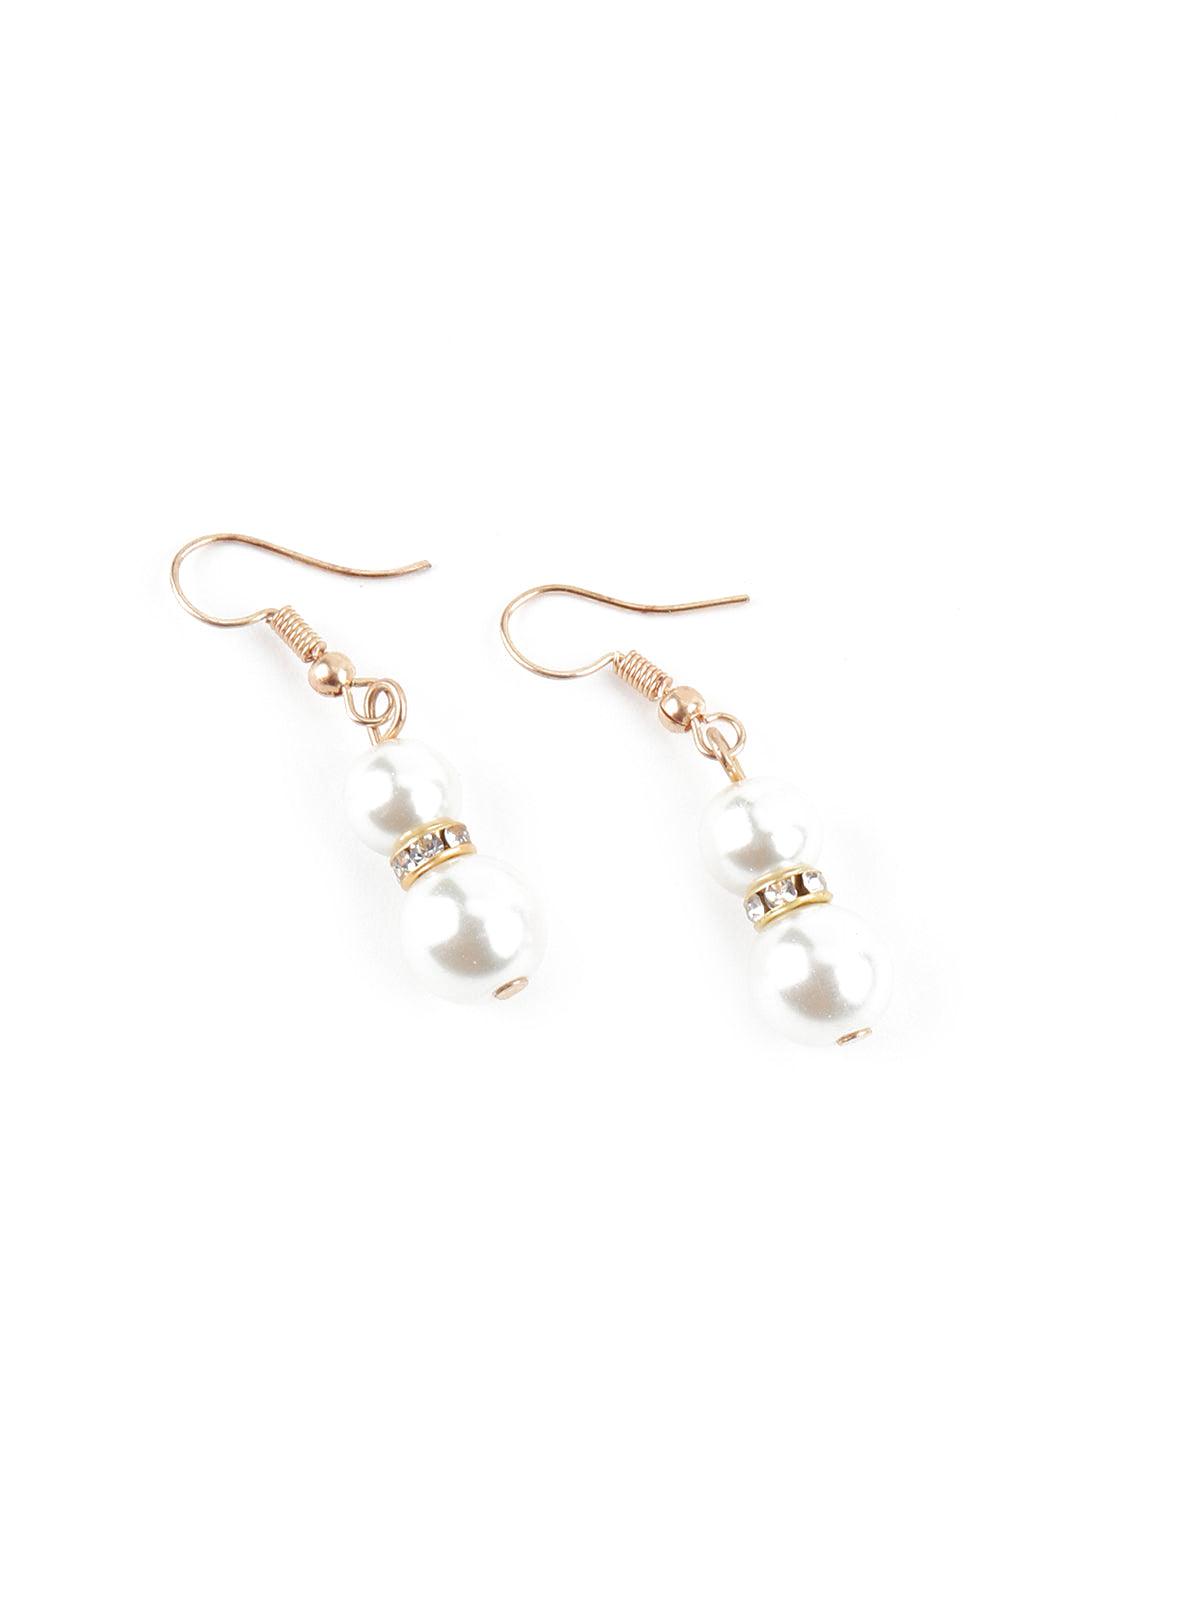 White Pearl Multi String Brooch Necklace - Odette